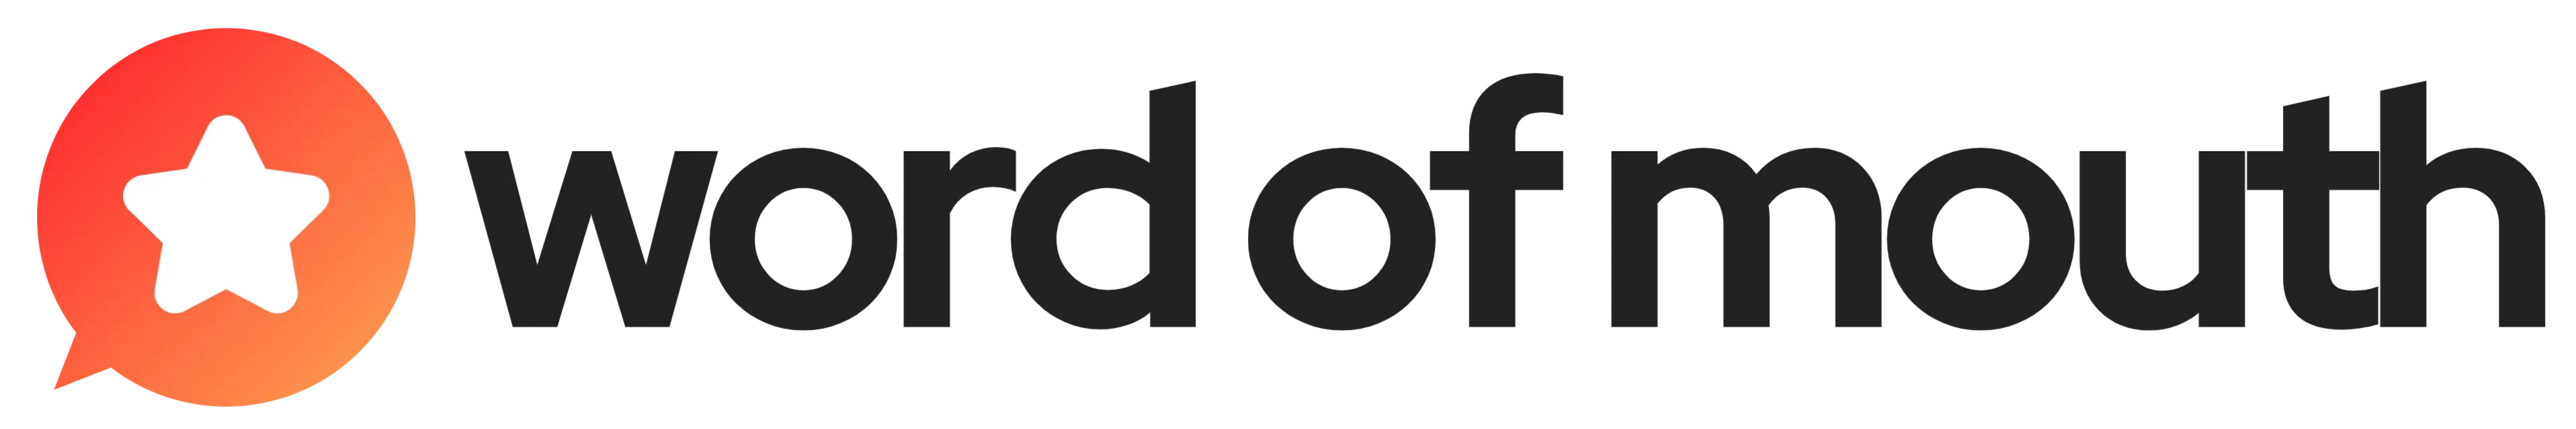 Wordofmouth logo mailer